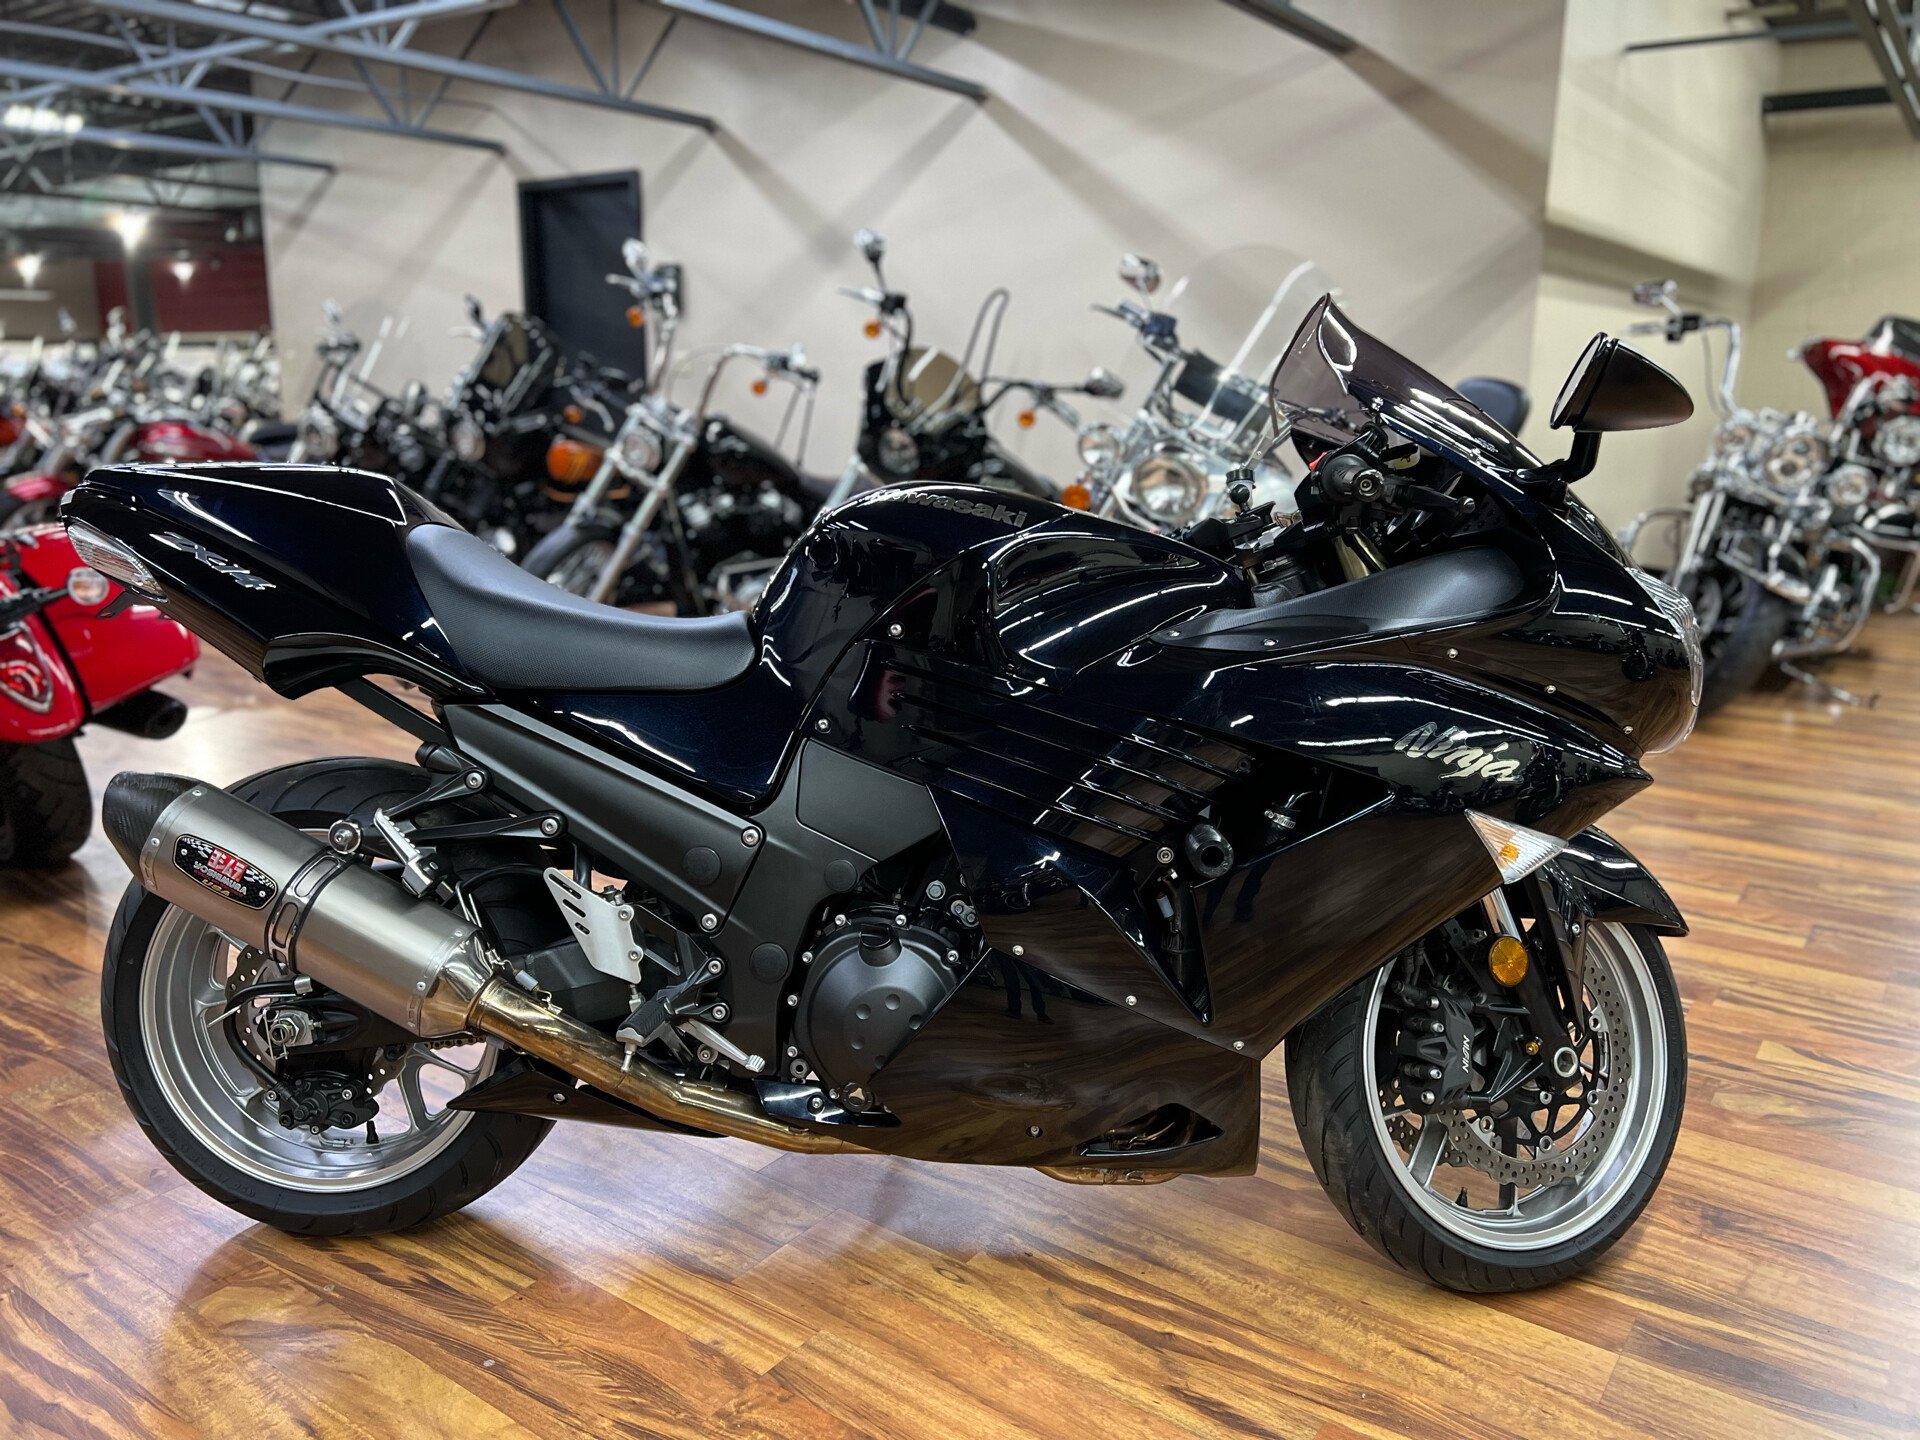 Kawasaki Ninja ZX-14 Motorcycles for Sale near Augusta, Georgia 